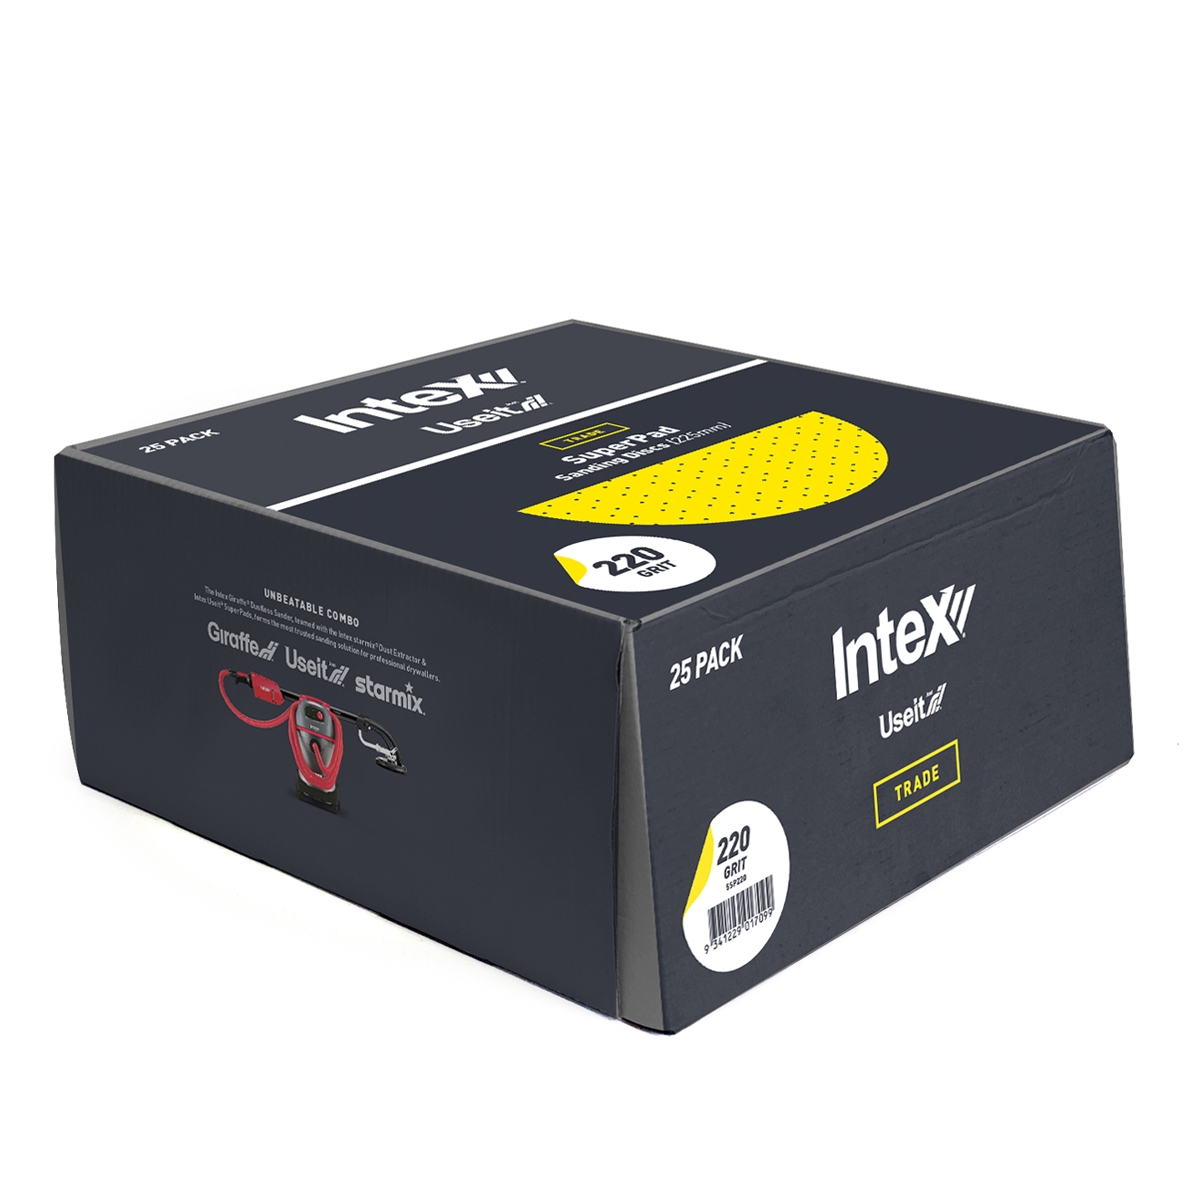 Intex Useit Trade Super-Pad Yellow 225mm (Pack 50 Discs)